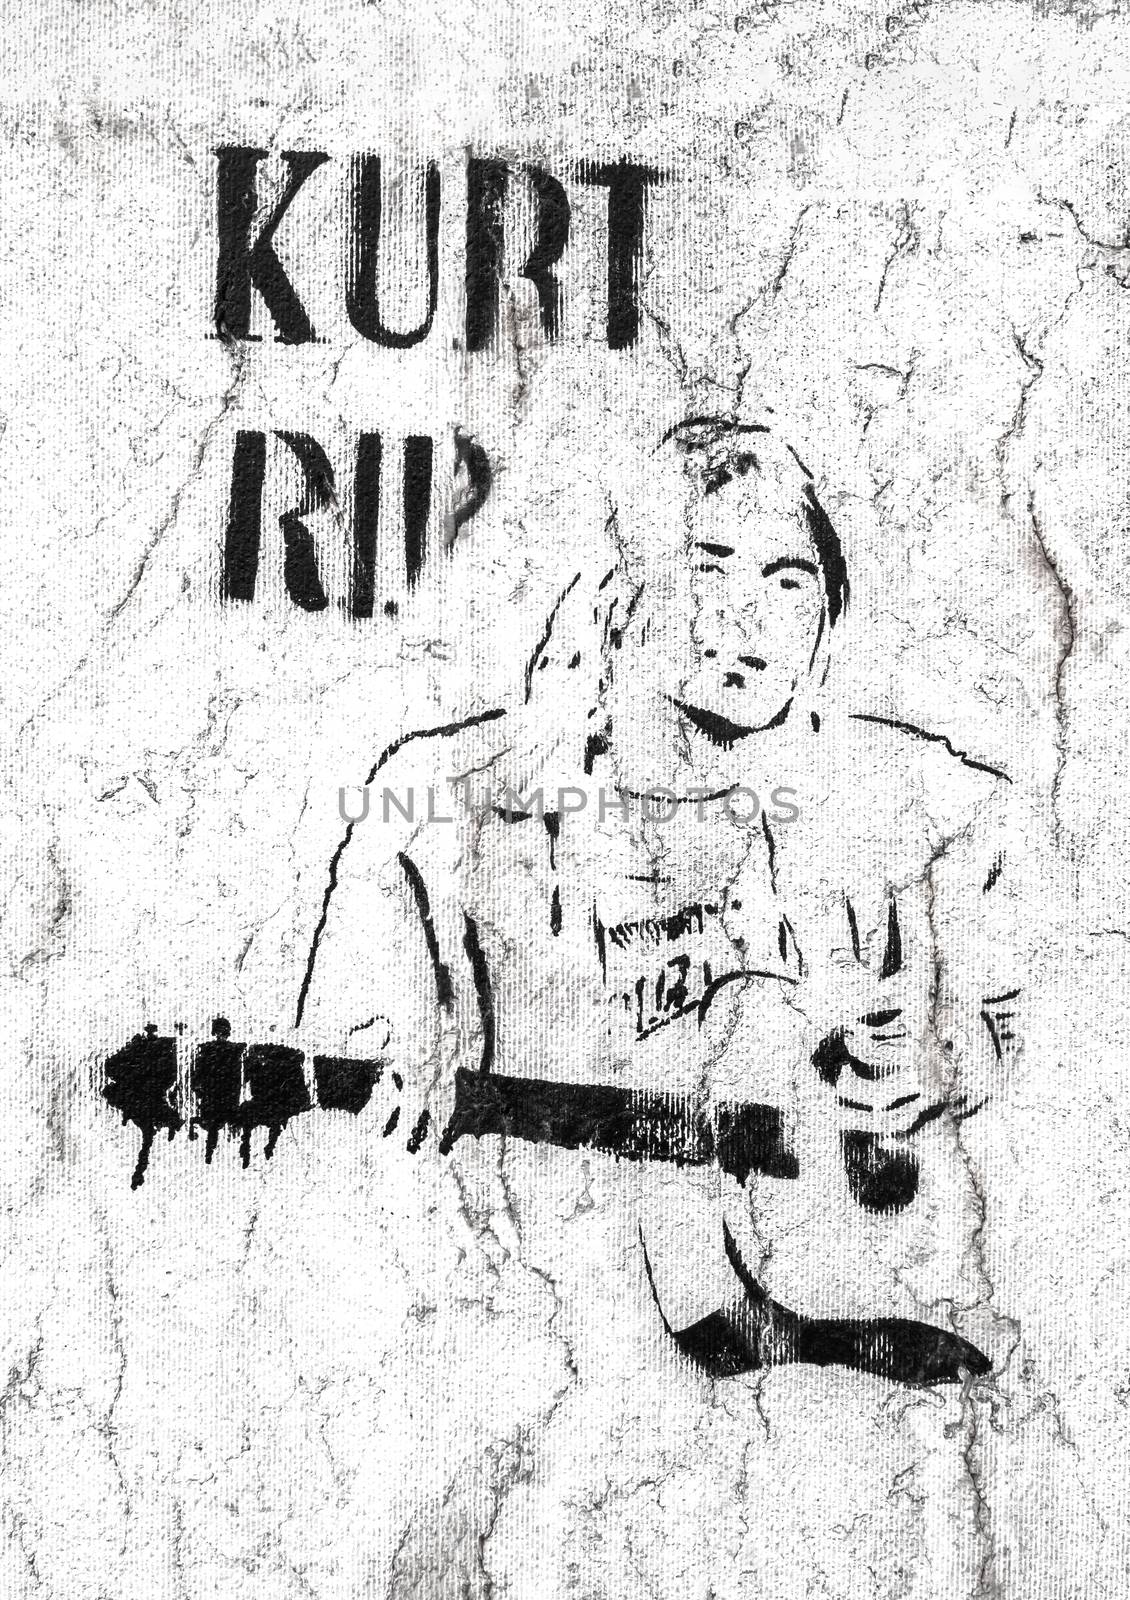 Kurt Cobain character. Graffiti / stencil on grungy wall. Bergamo, ITALY - May 20, 2019.